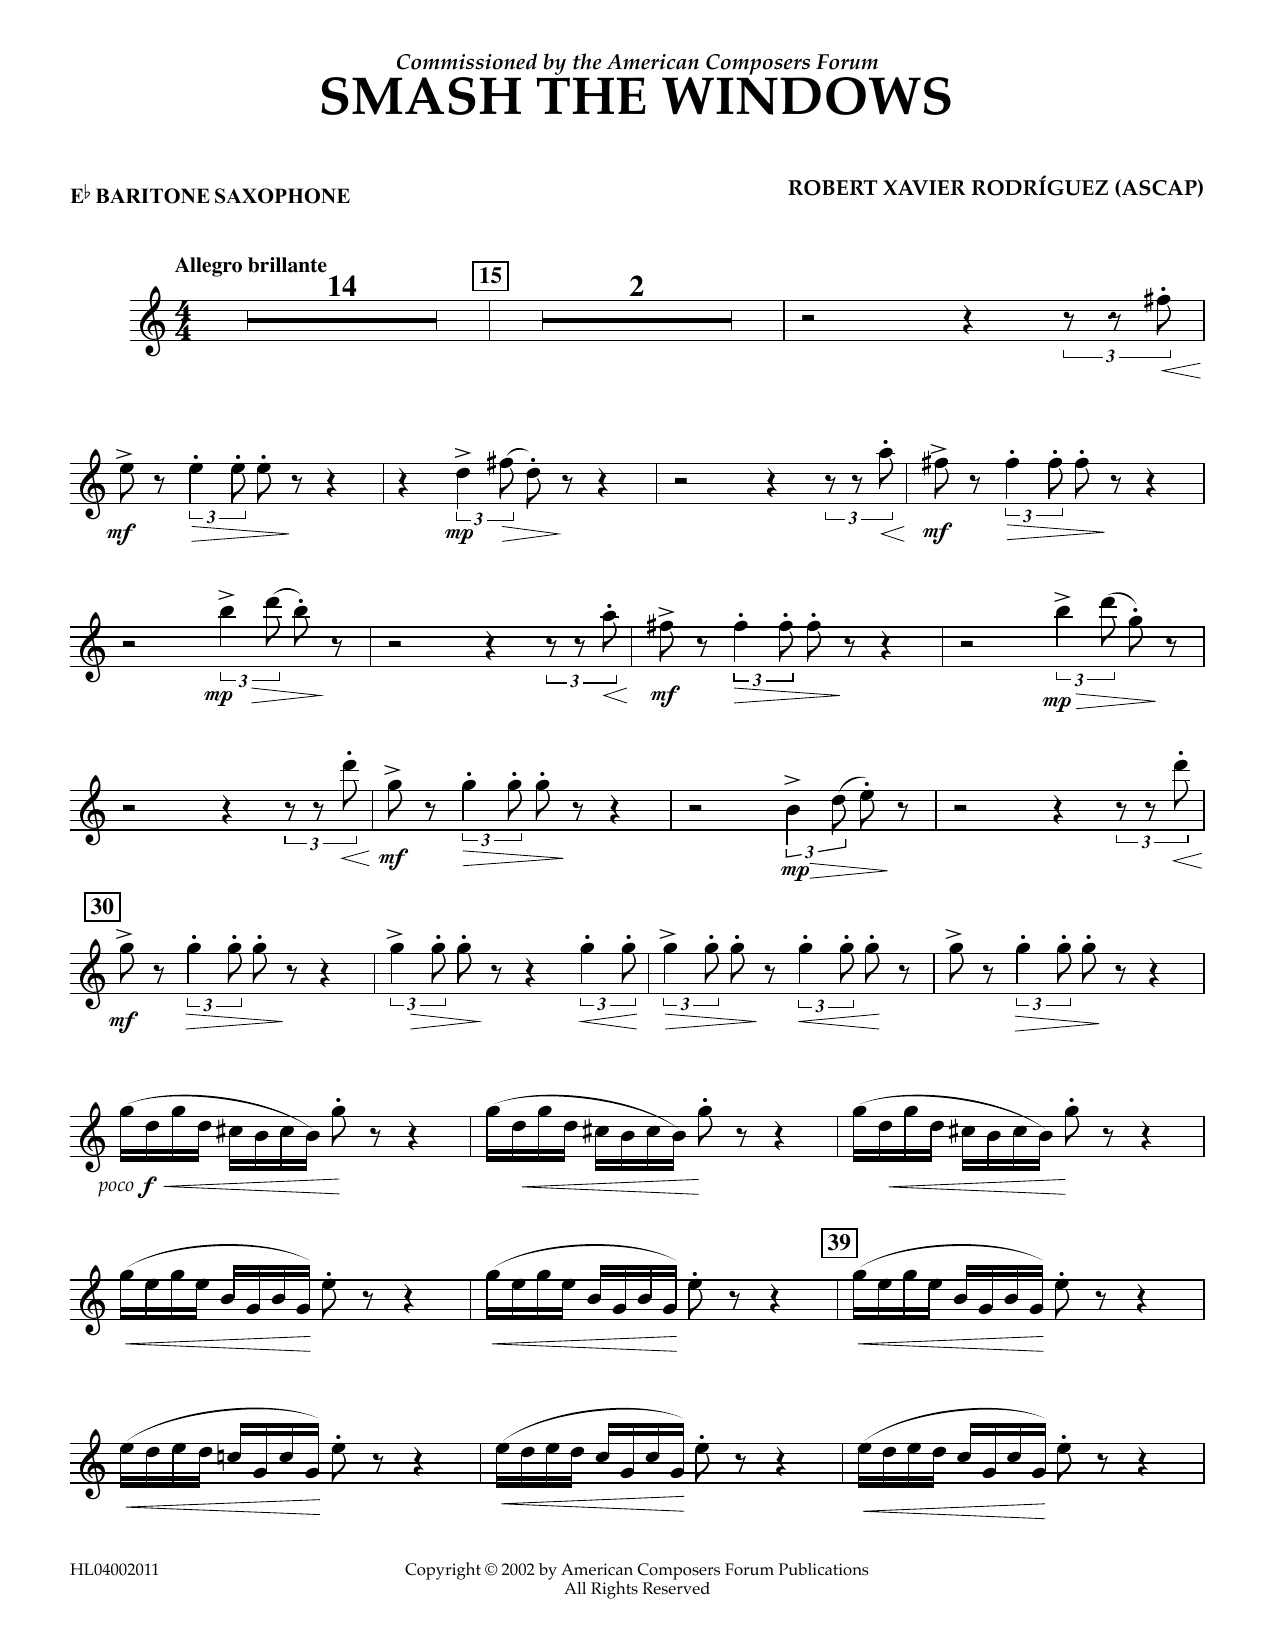 Robert Xavier Rodríguez Smash the Windows - Eb Baritone Saxophone Sheet Music Notes & Chords for Concert Band - Download or Print PDF